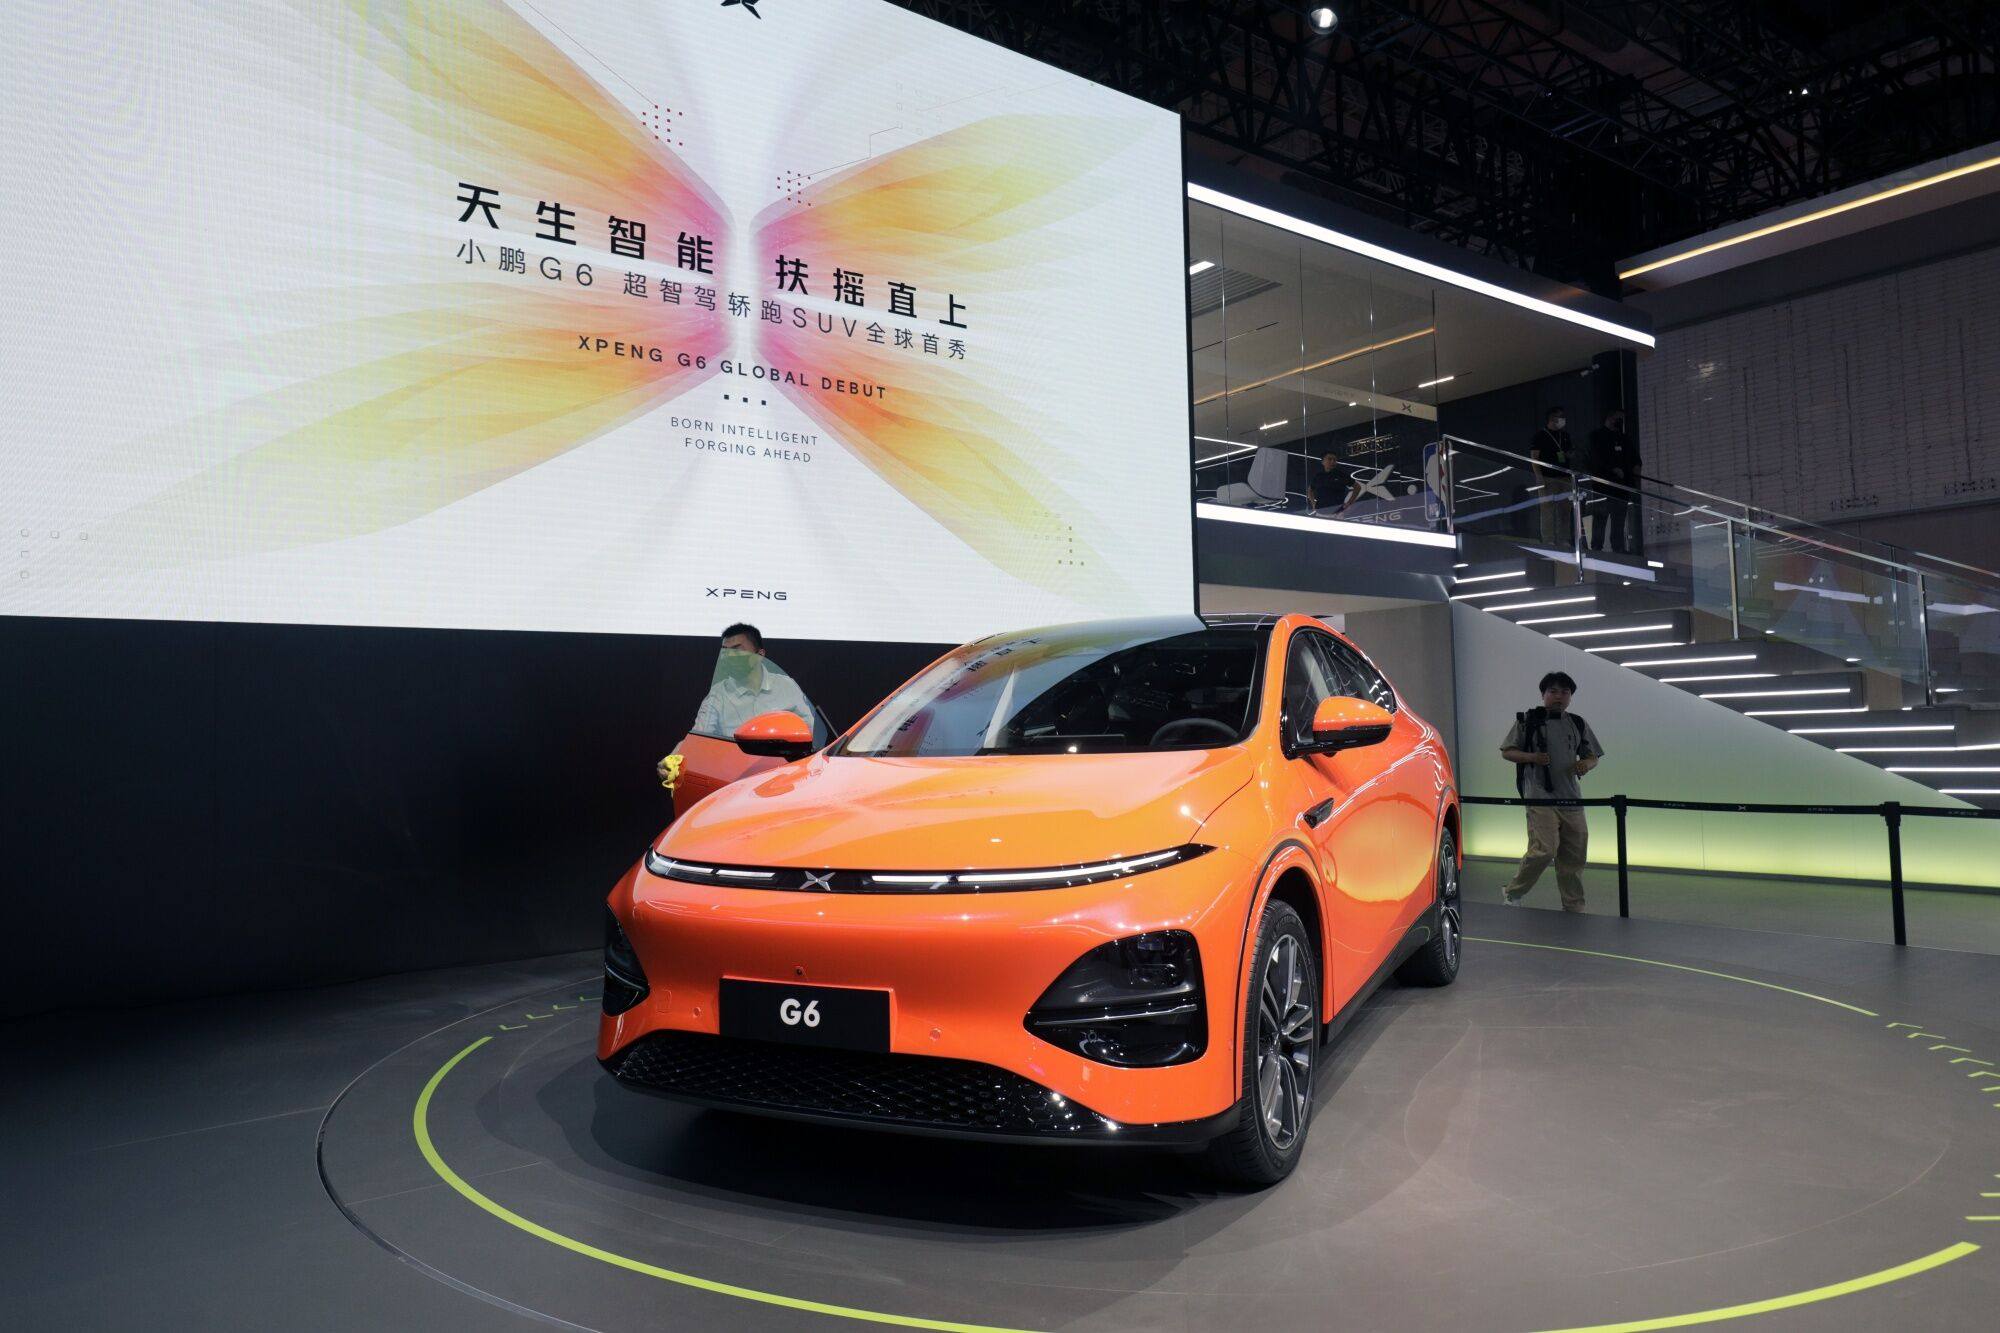 China's EV wars: Li Auto becomes Tesla's nearest rival in premium